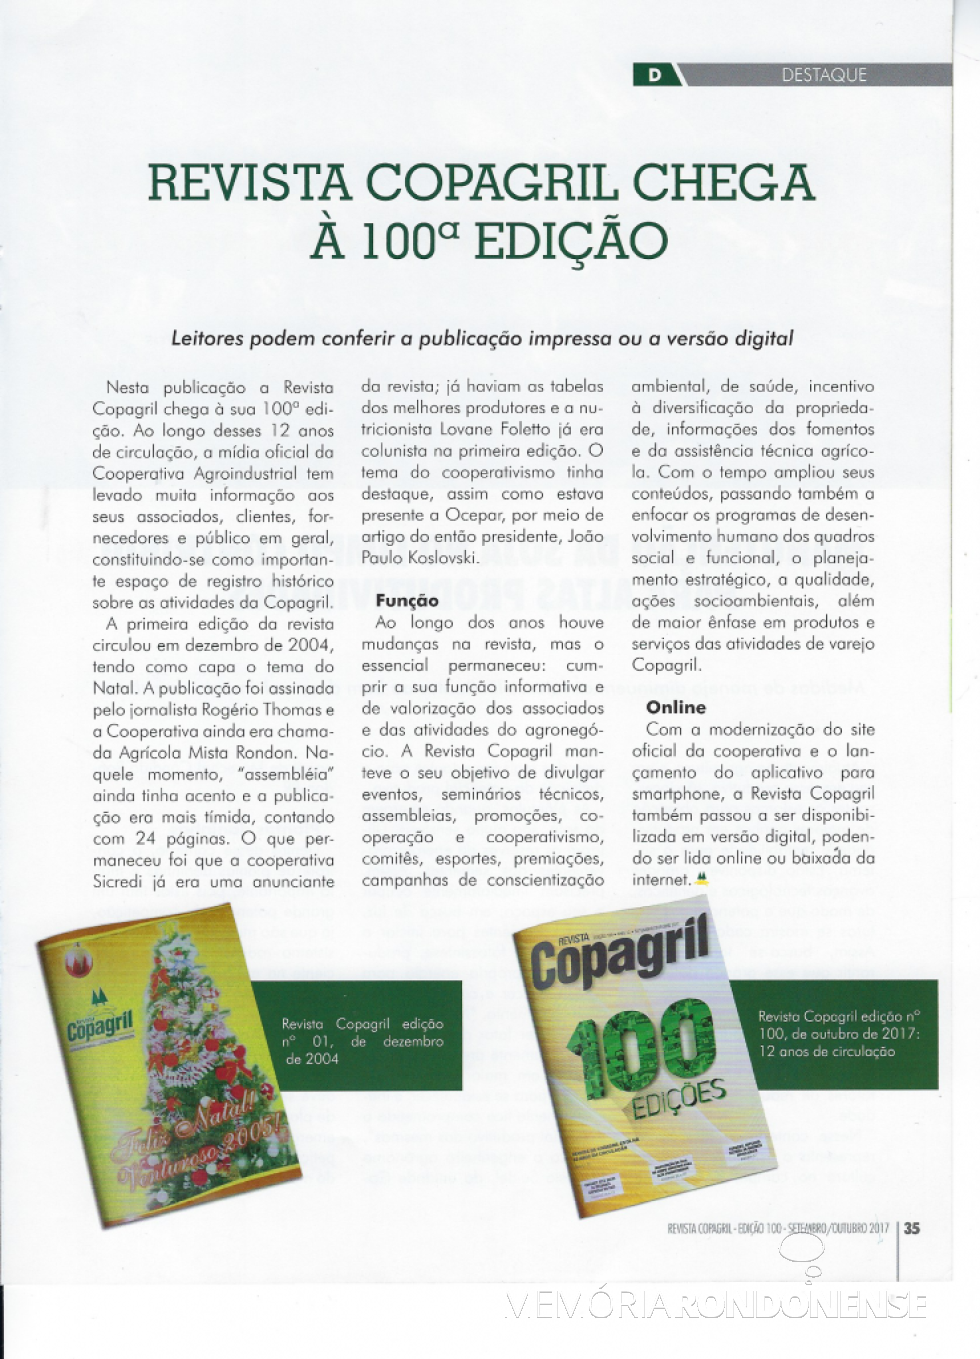 || Destaque informativo na Revista Copagril nº 100, sobre a  centésima edição. 
Imagem: Revista Copagril - FOTO 9 - 